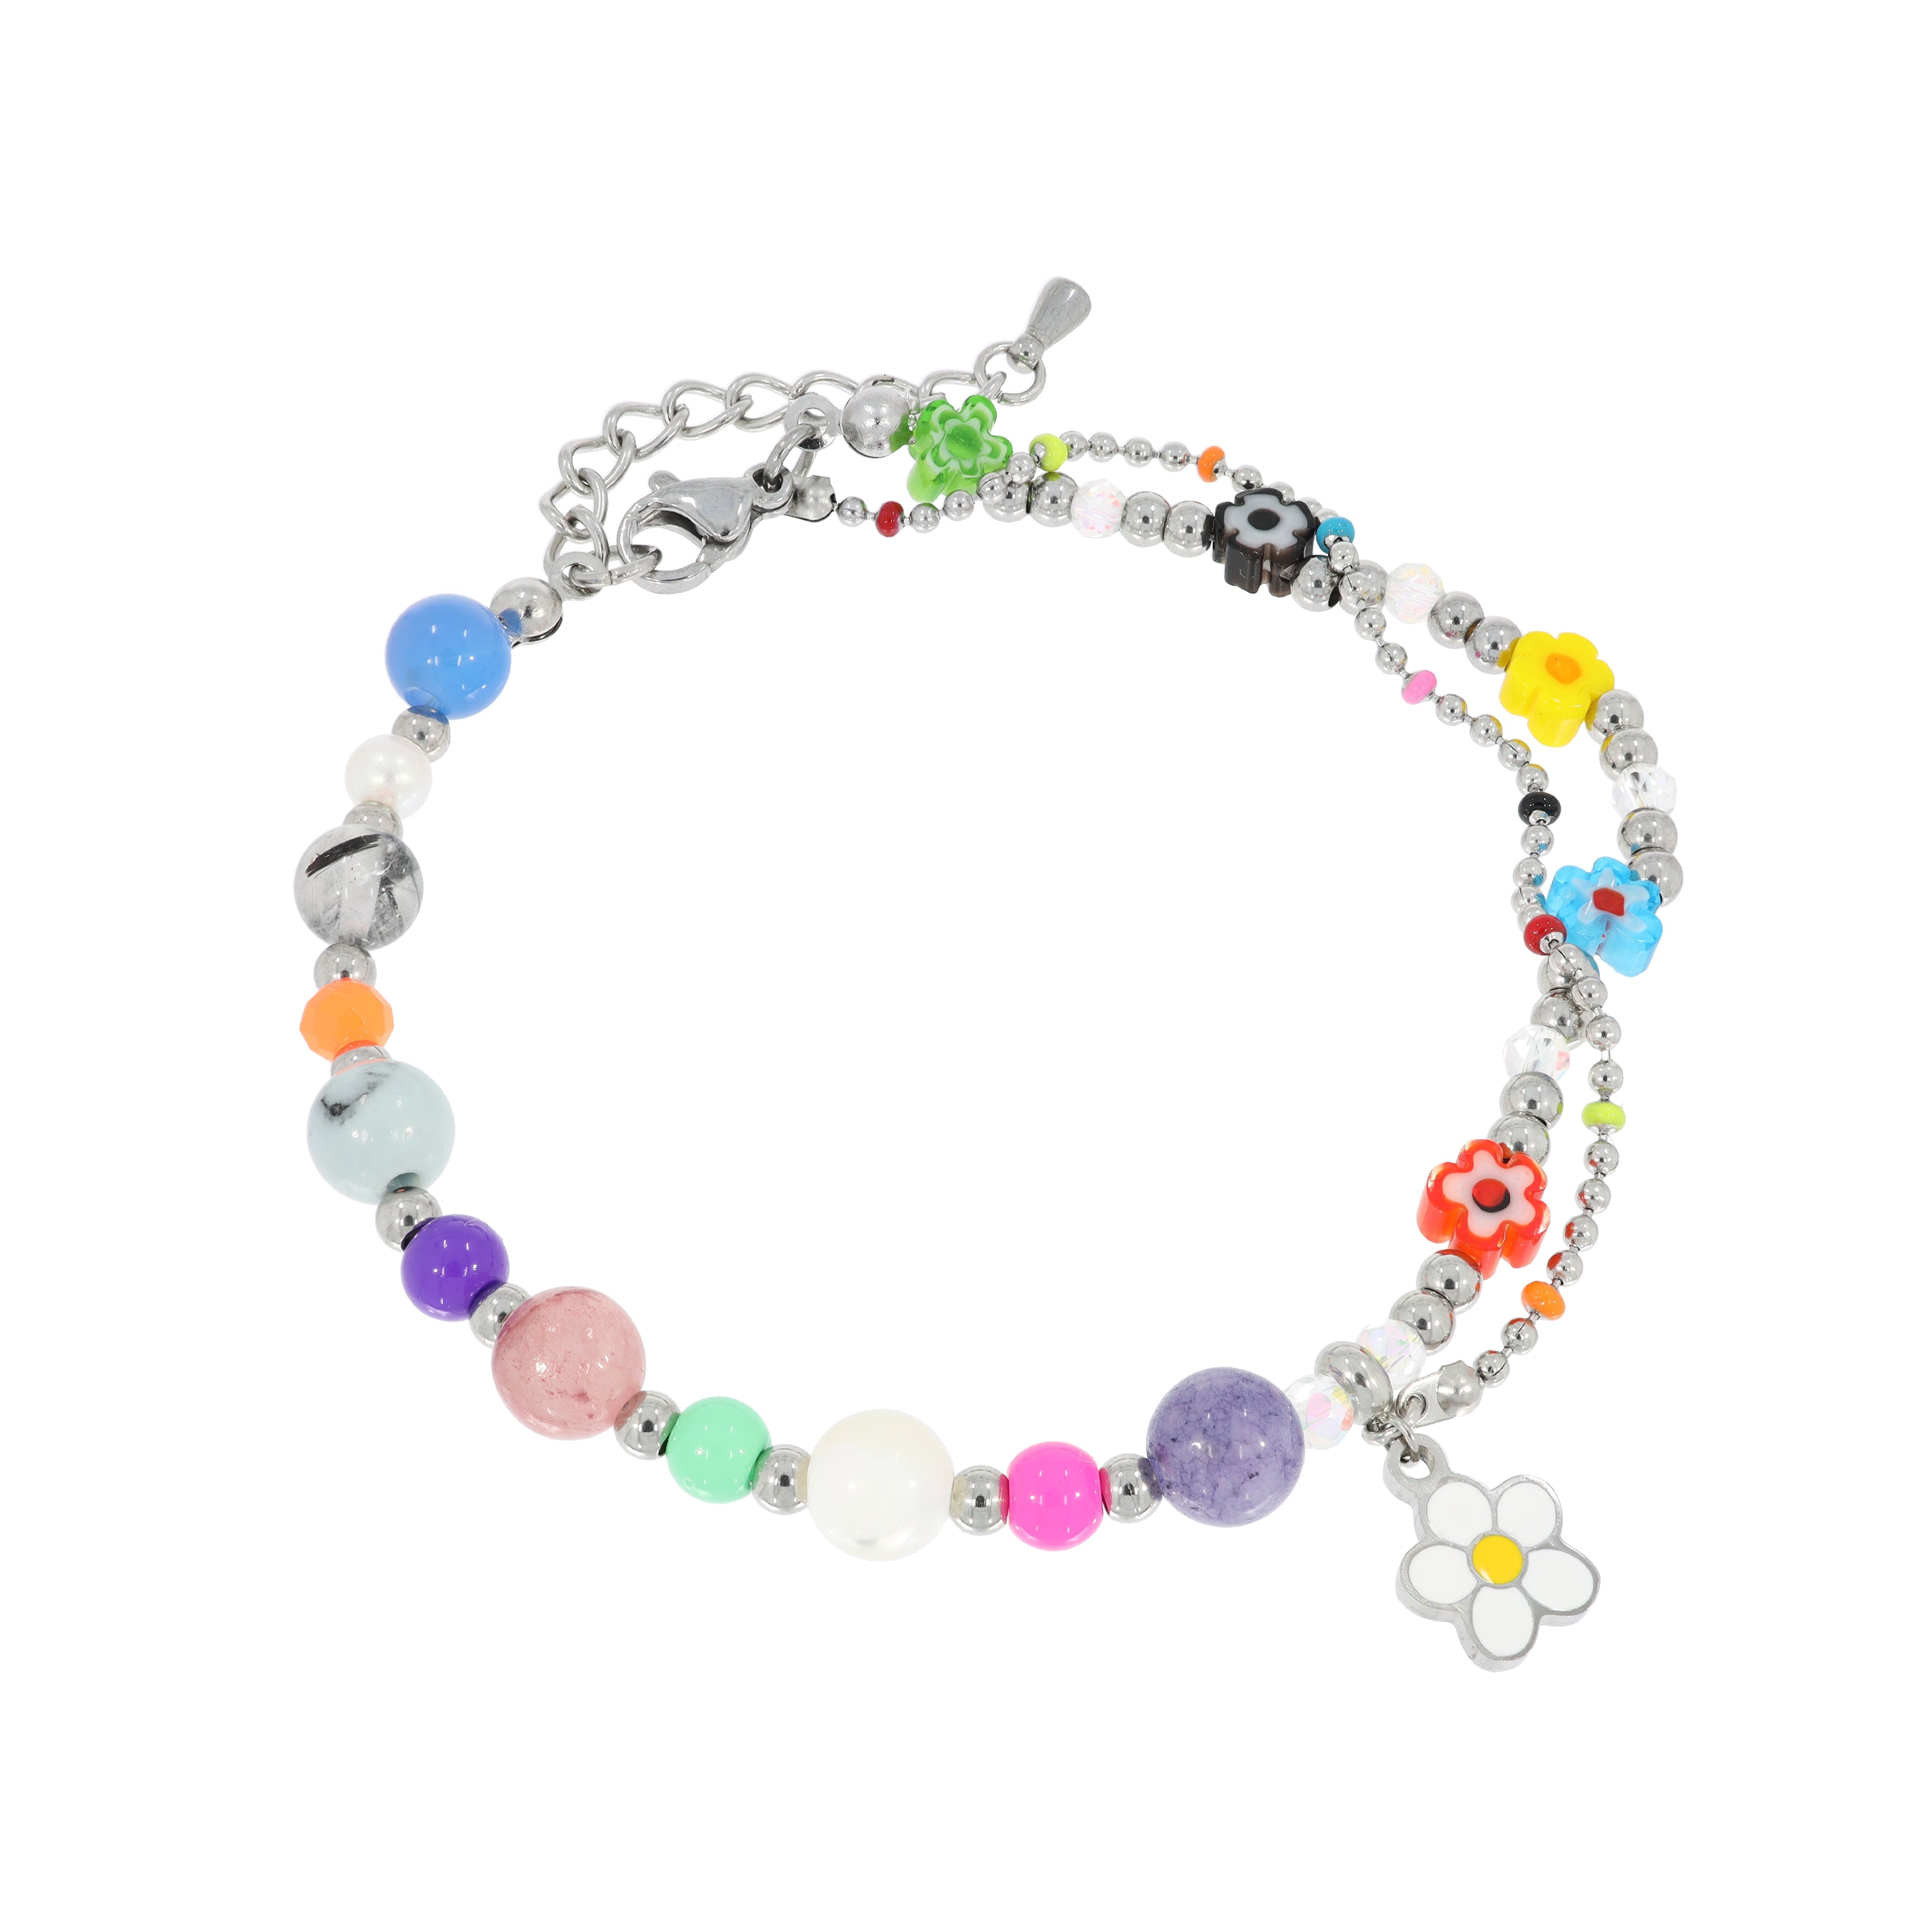 Colorful Daisy Beads Bracelet